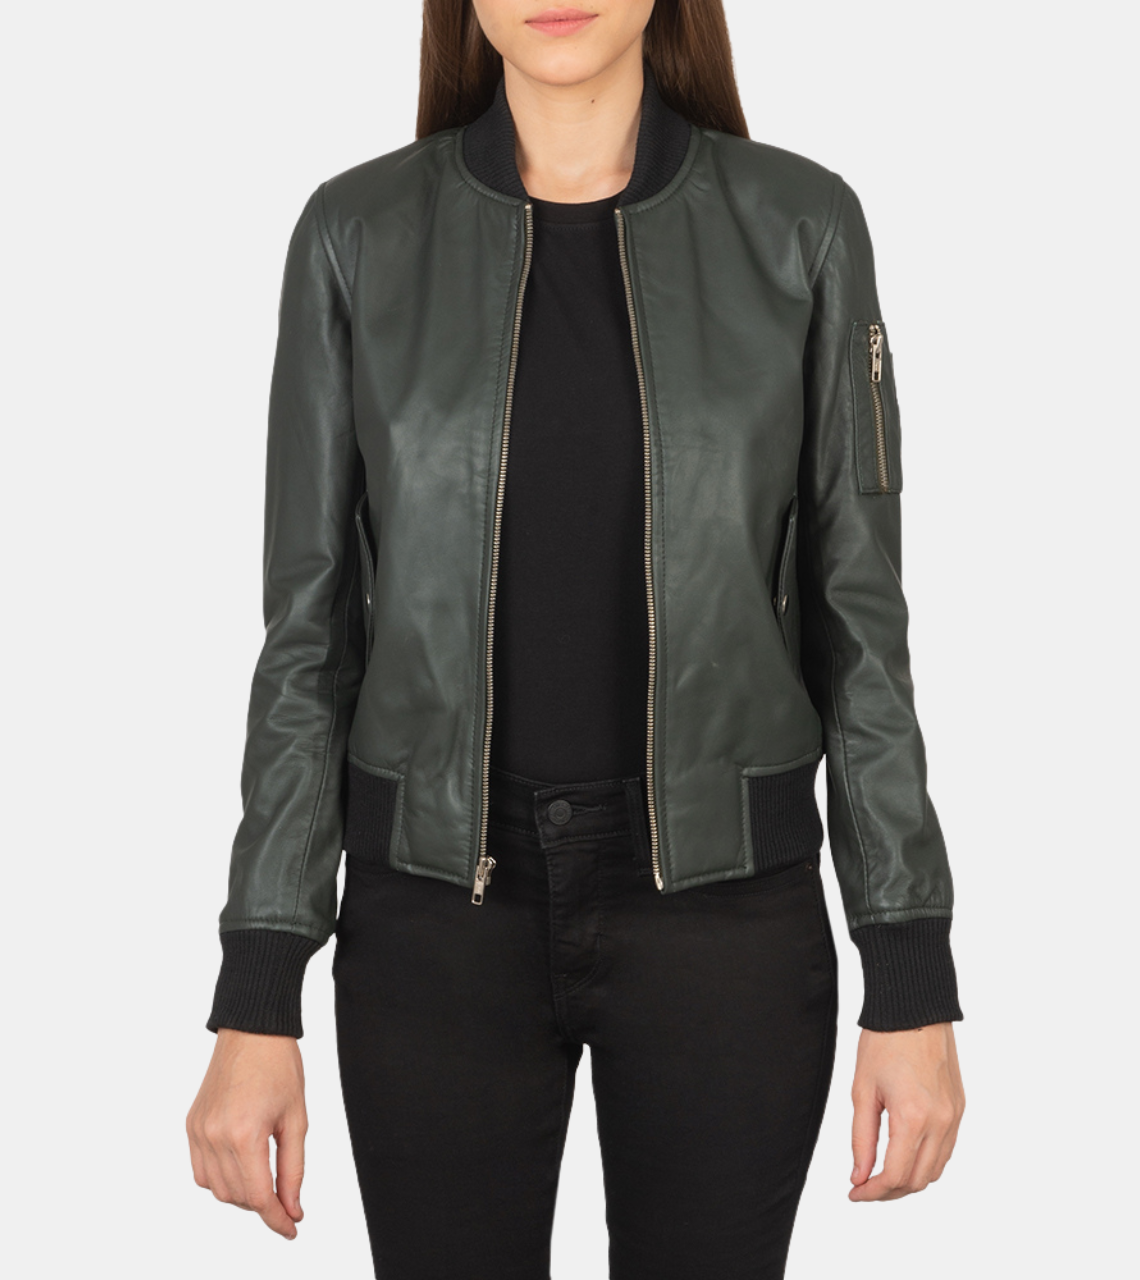 Carmilla Women's Green Bomber Leather Jacket